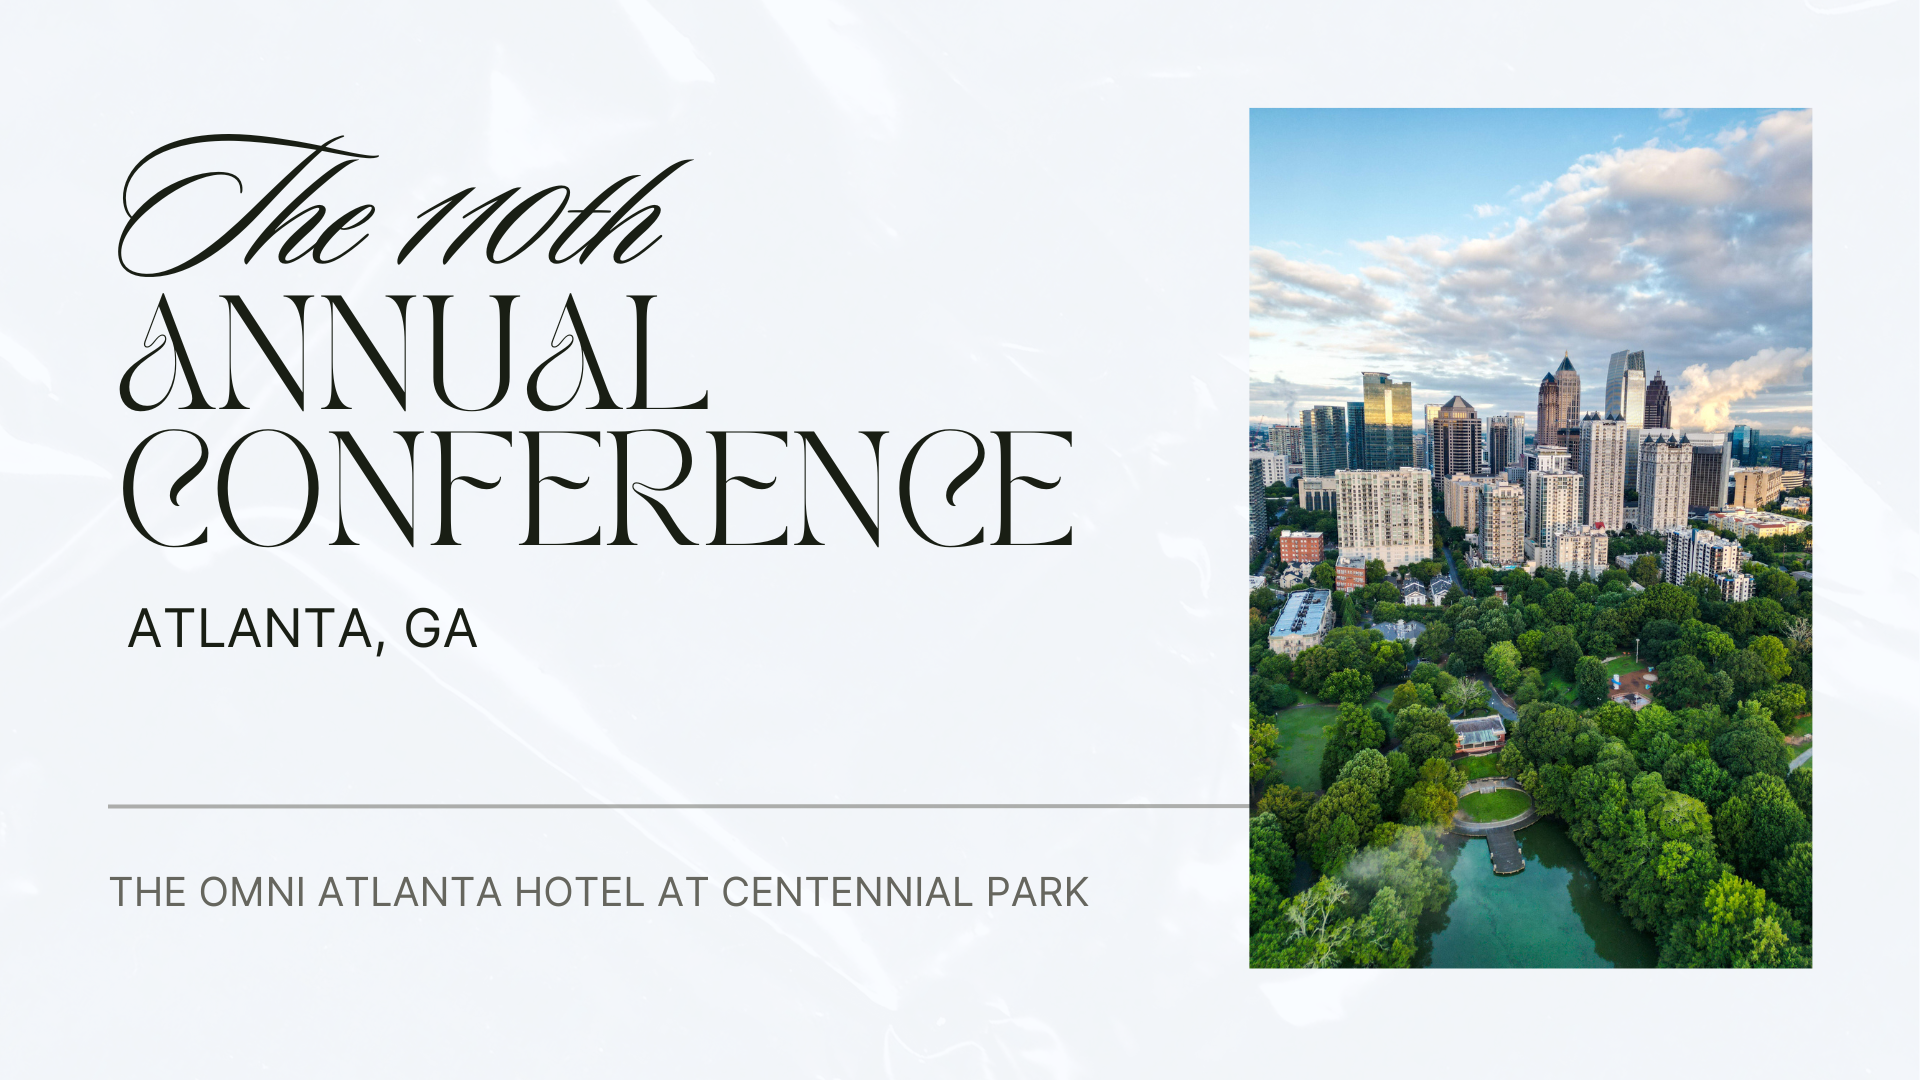 The 110th Annual Conference. Atlanta, GA. The Omni Atlanta Hotel at Centennial Park